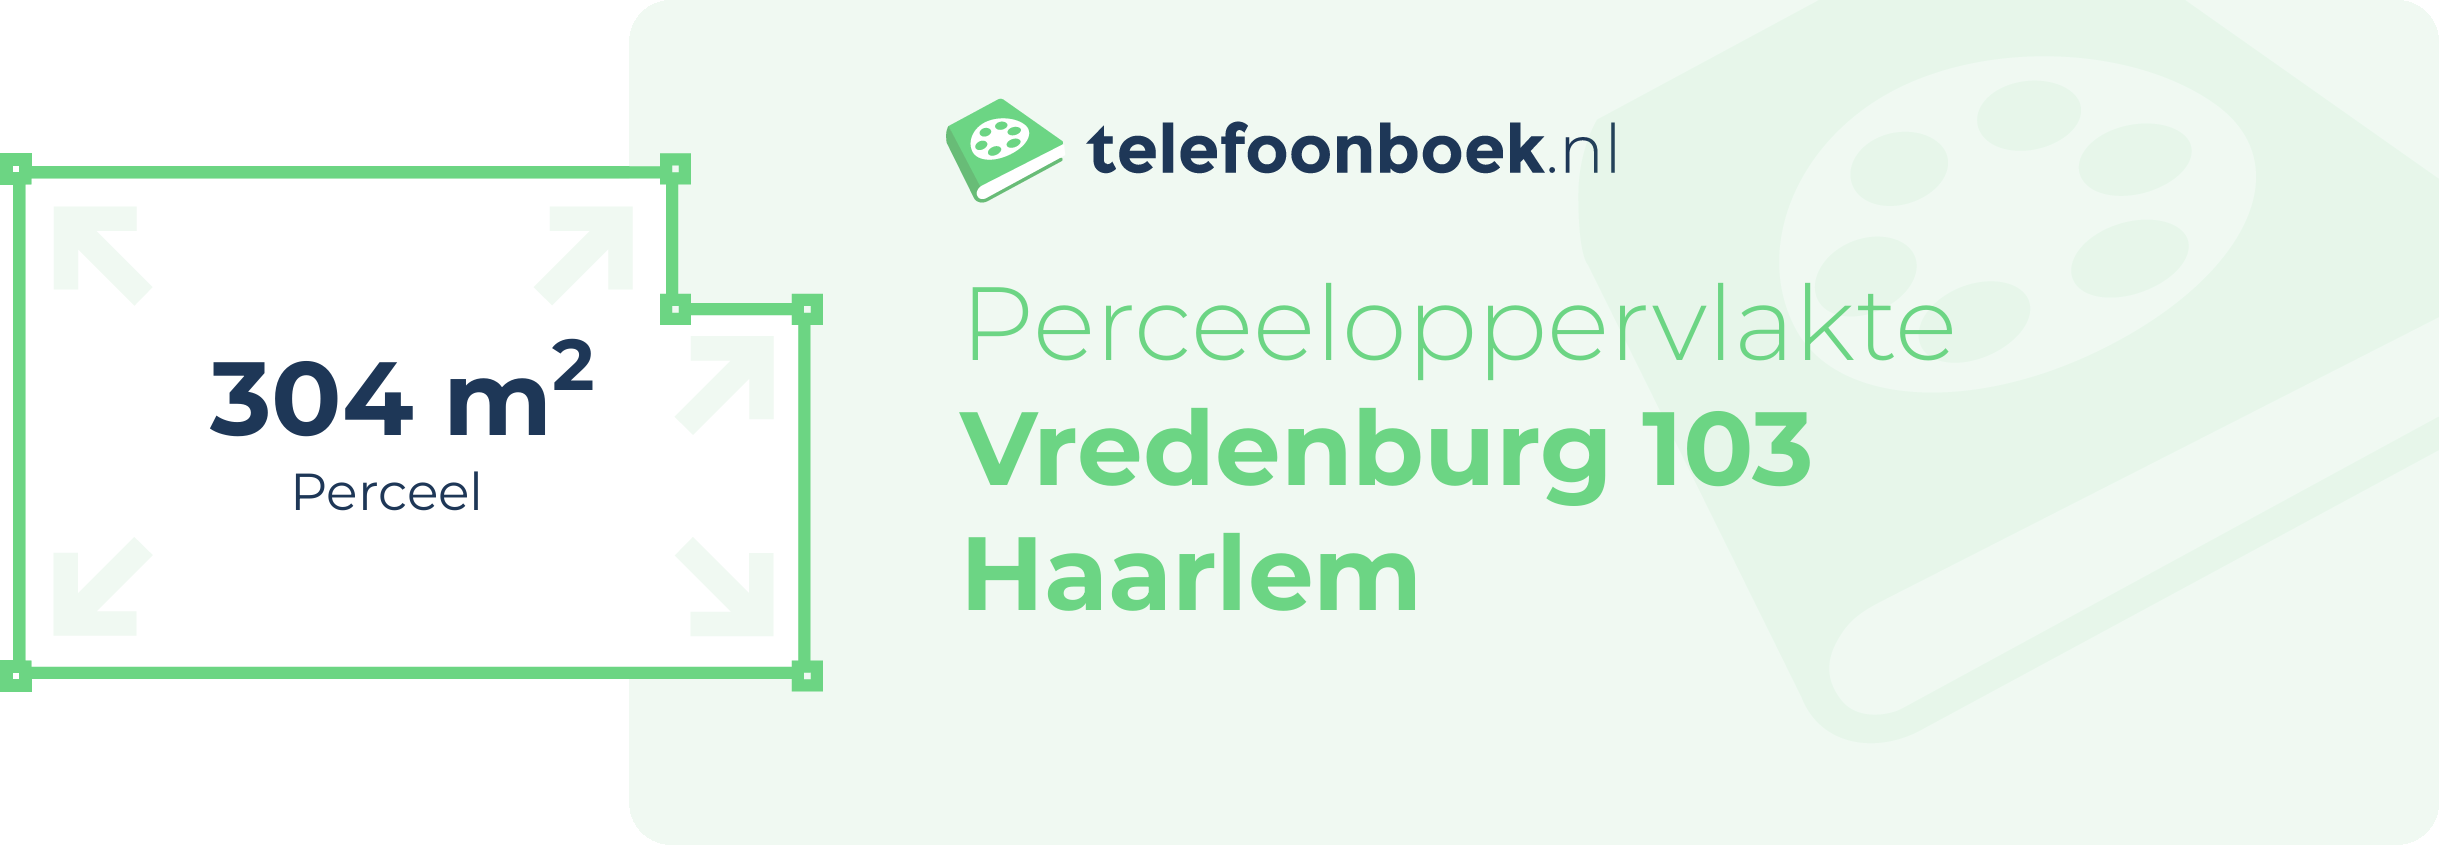 Perceeloppervlakte Vredenburg 103 Haarlem